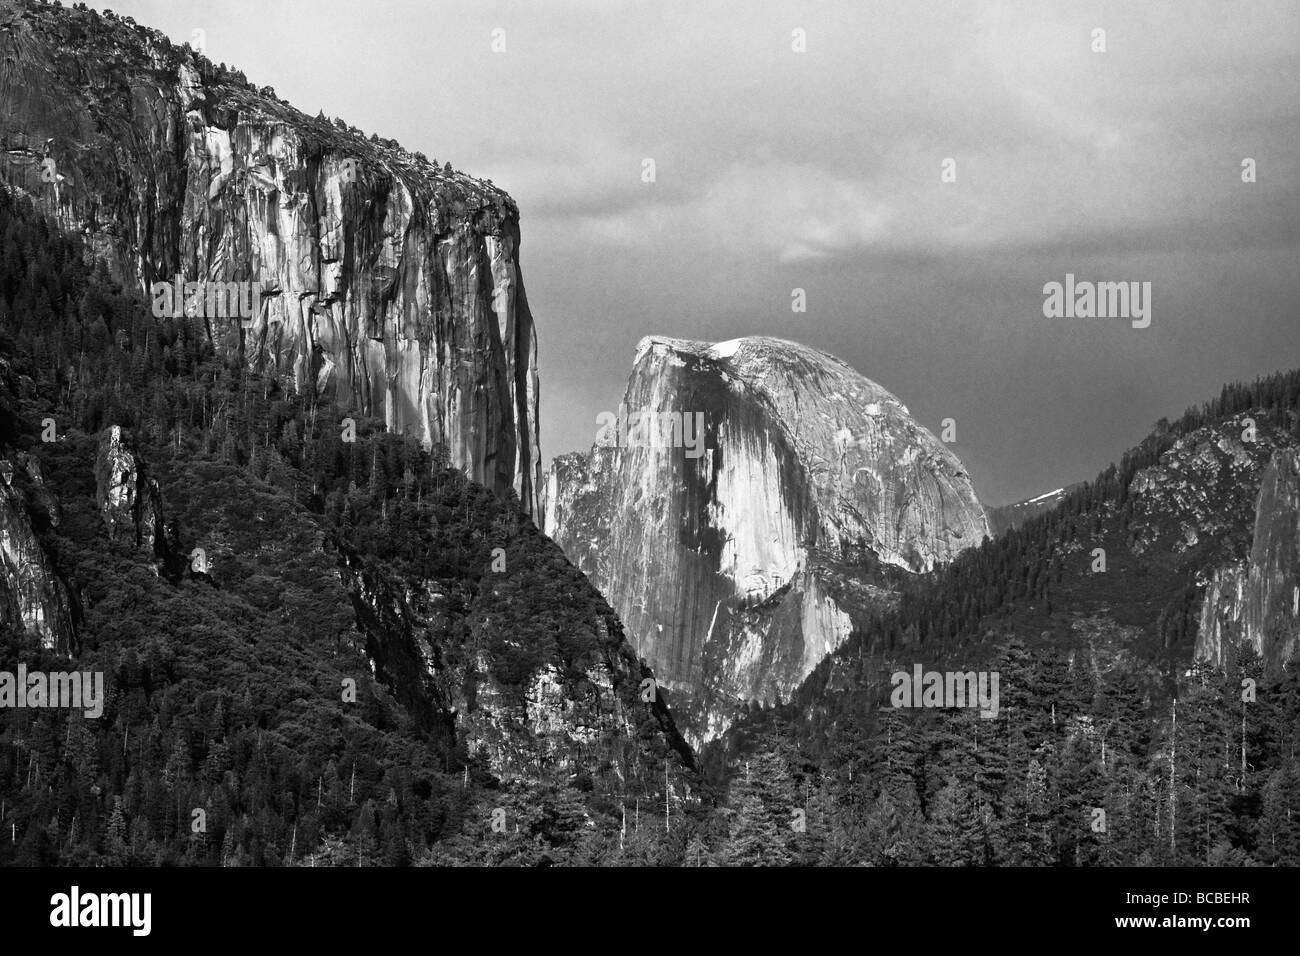 A view of El Capitan and Half Dome in Yosemite. Stock Photo